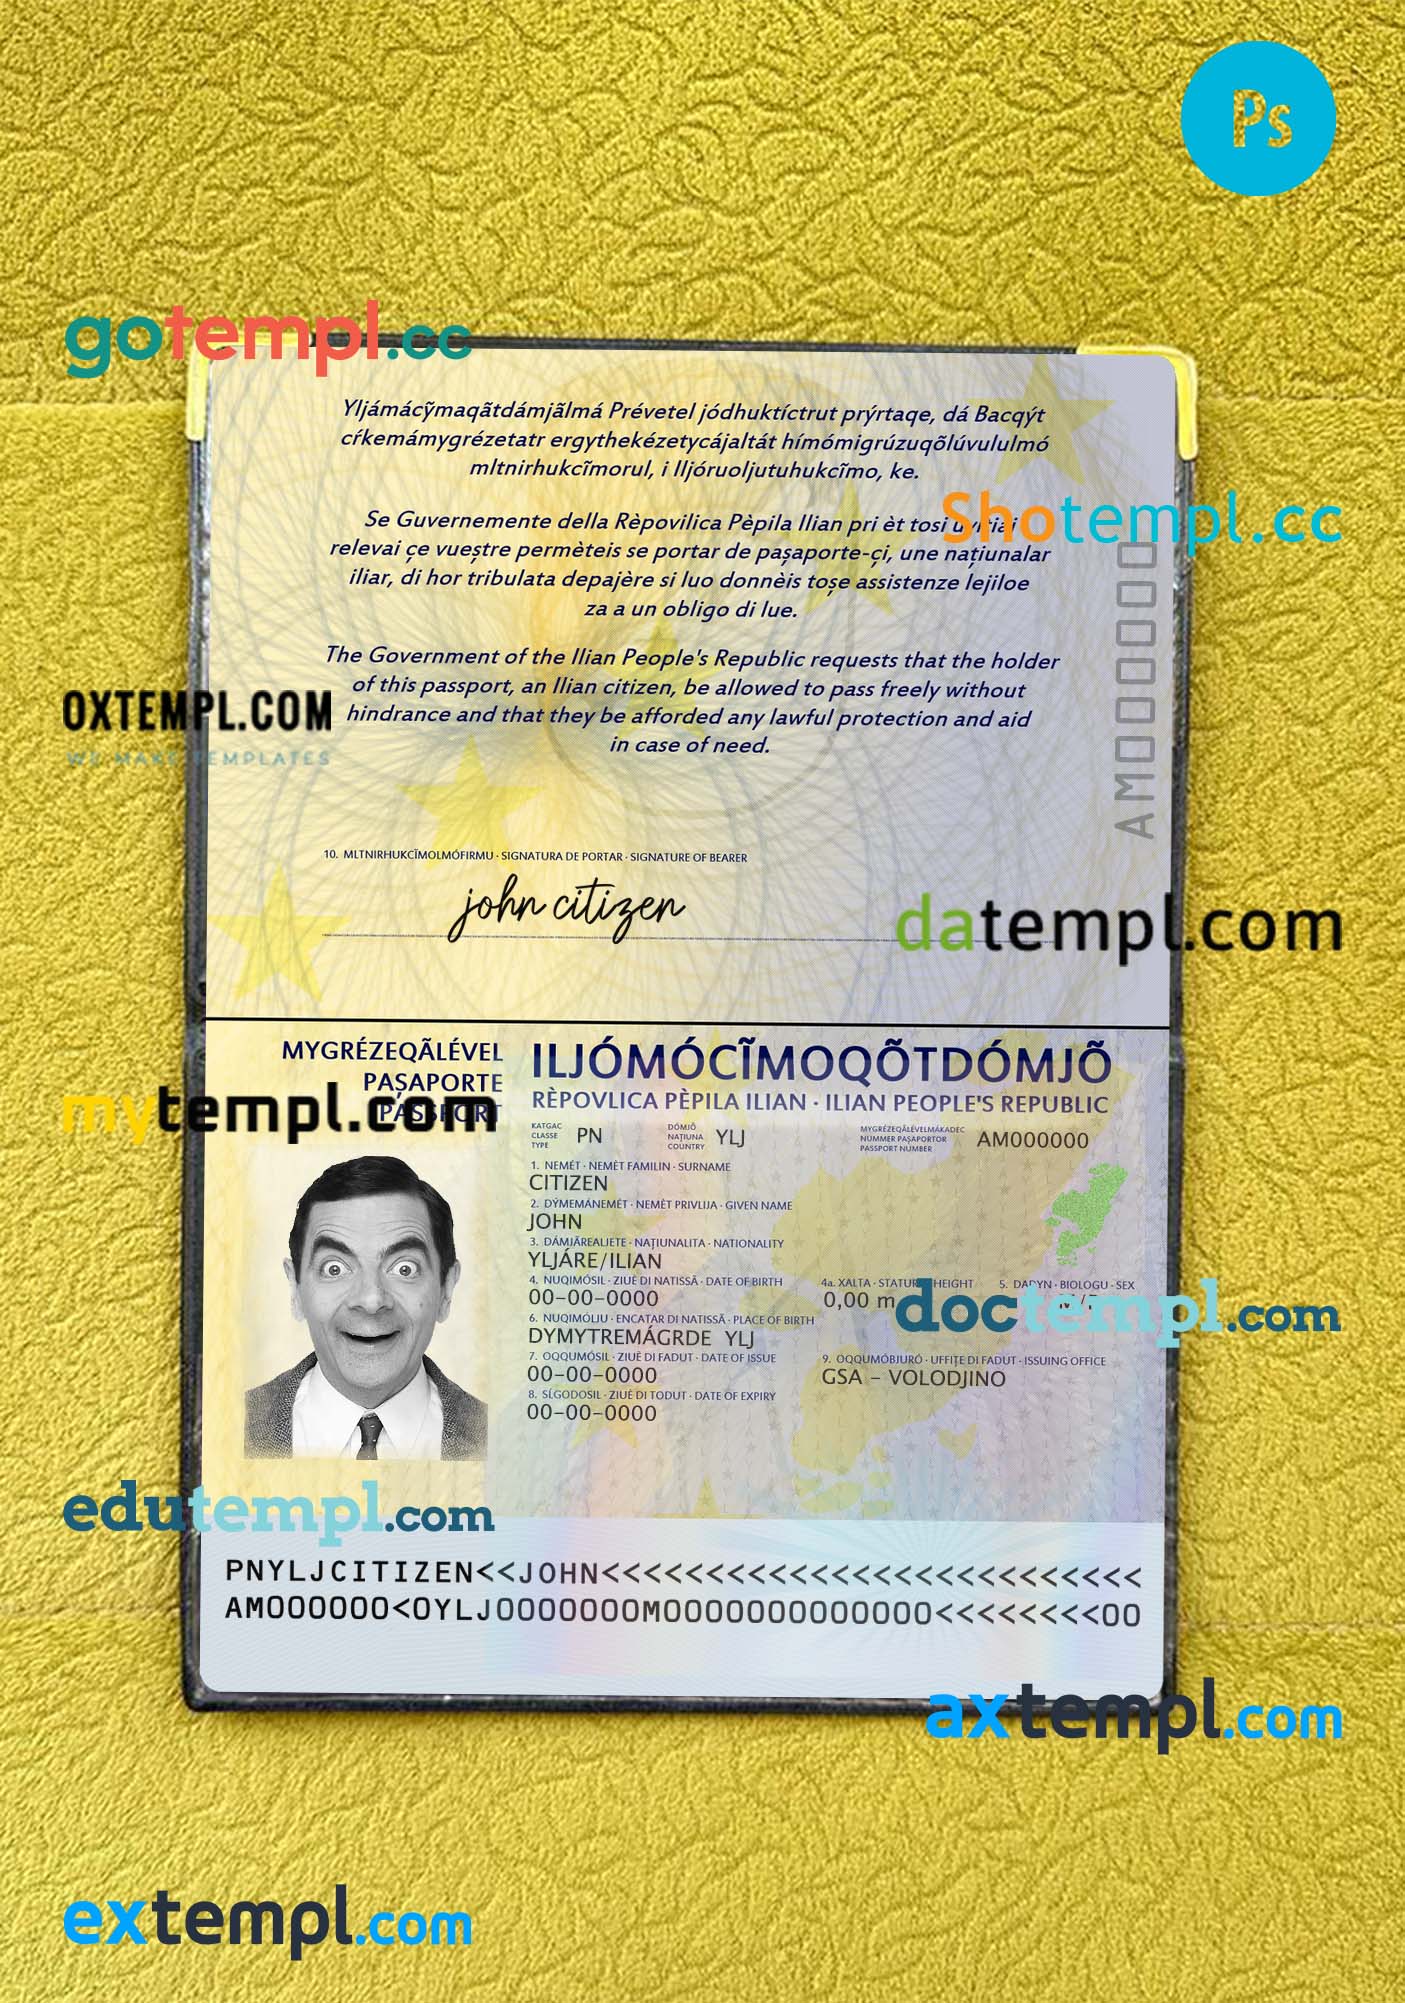 Ilia passport psd files, editable scan and snapshot sample, 2 in 1